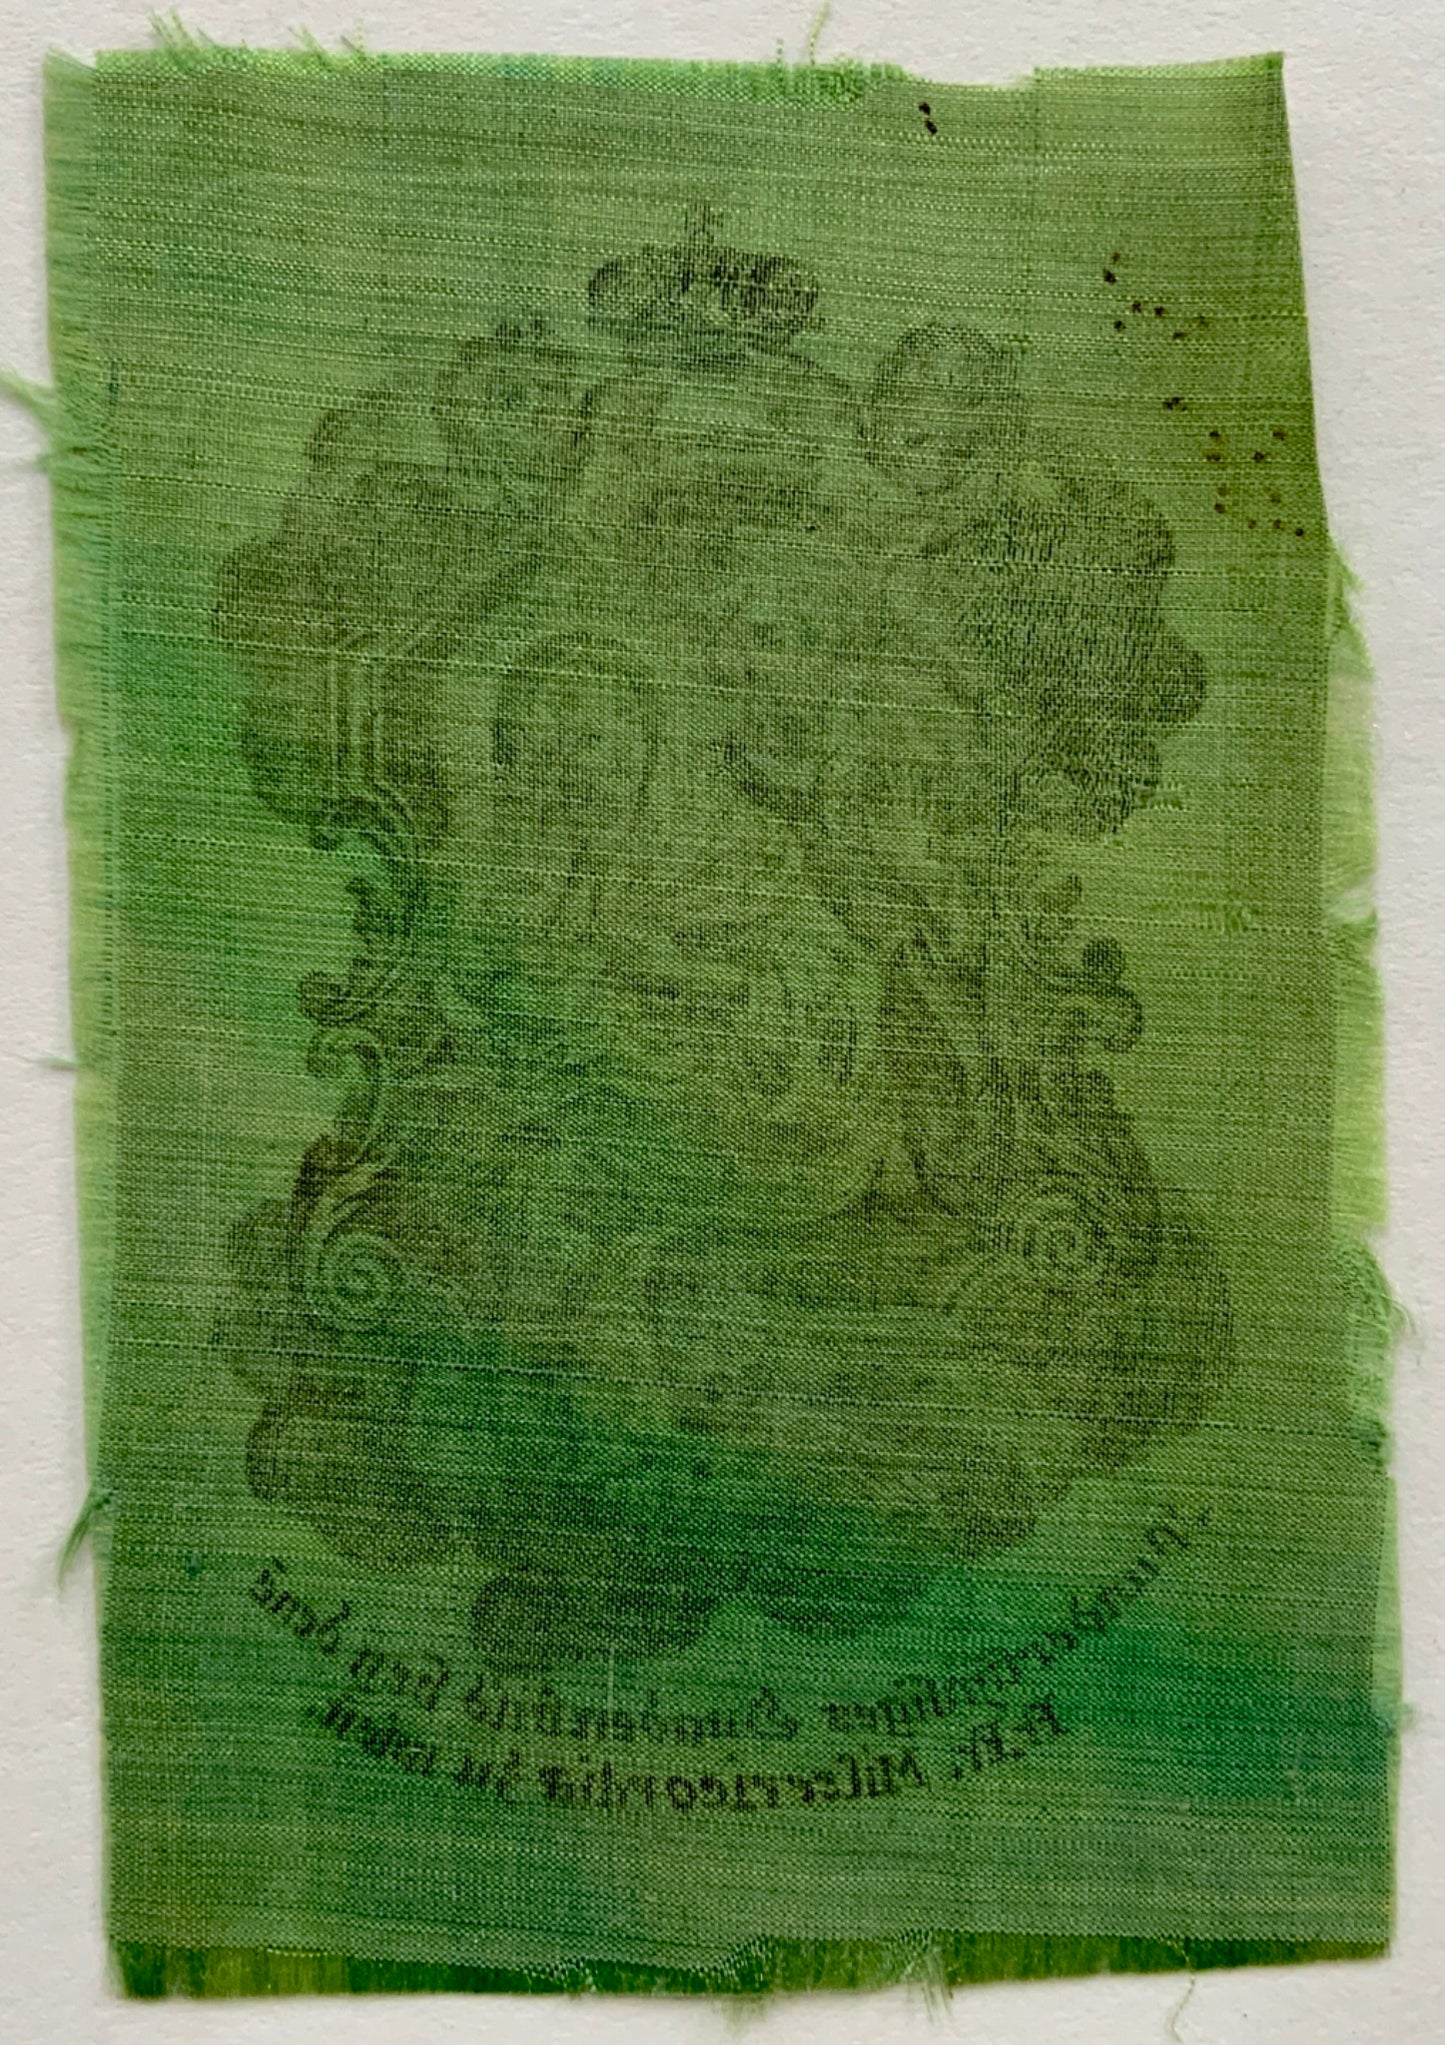 1760 Holy Card - copper engraving on SILK “Gnadenbild” Vienna Austria